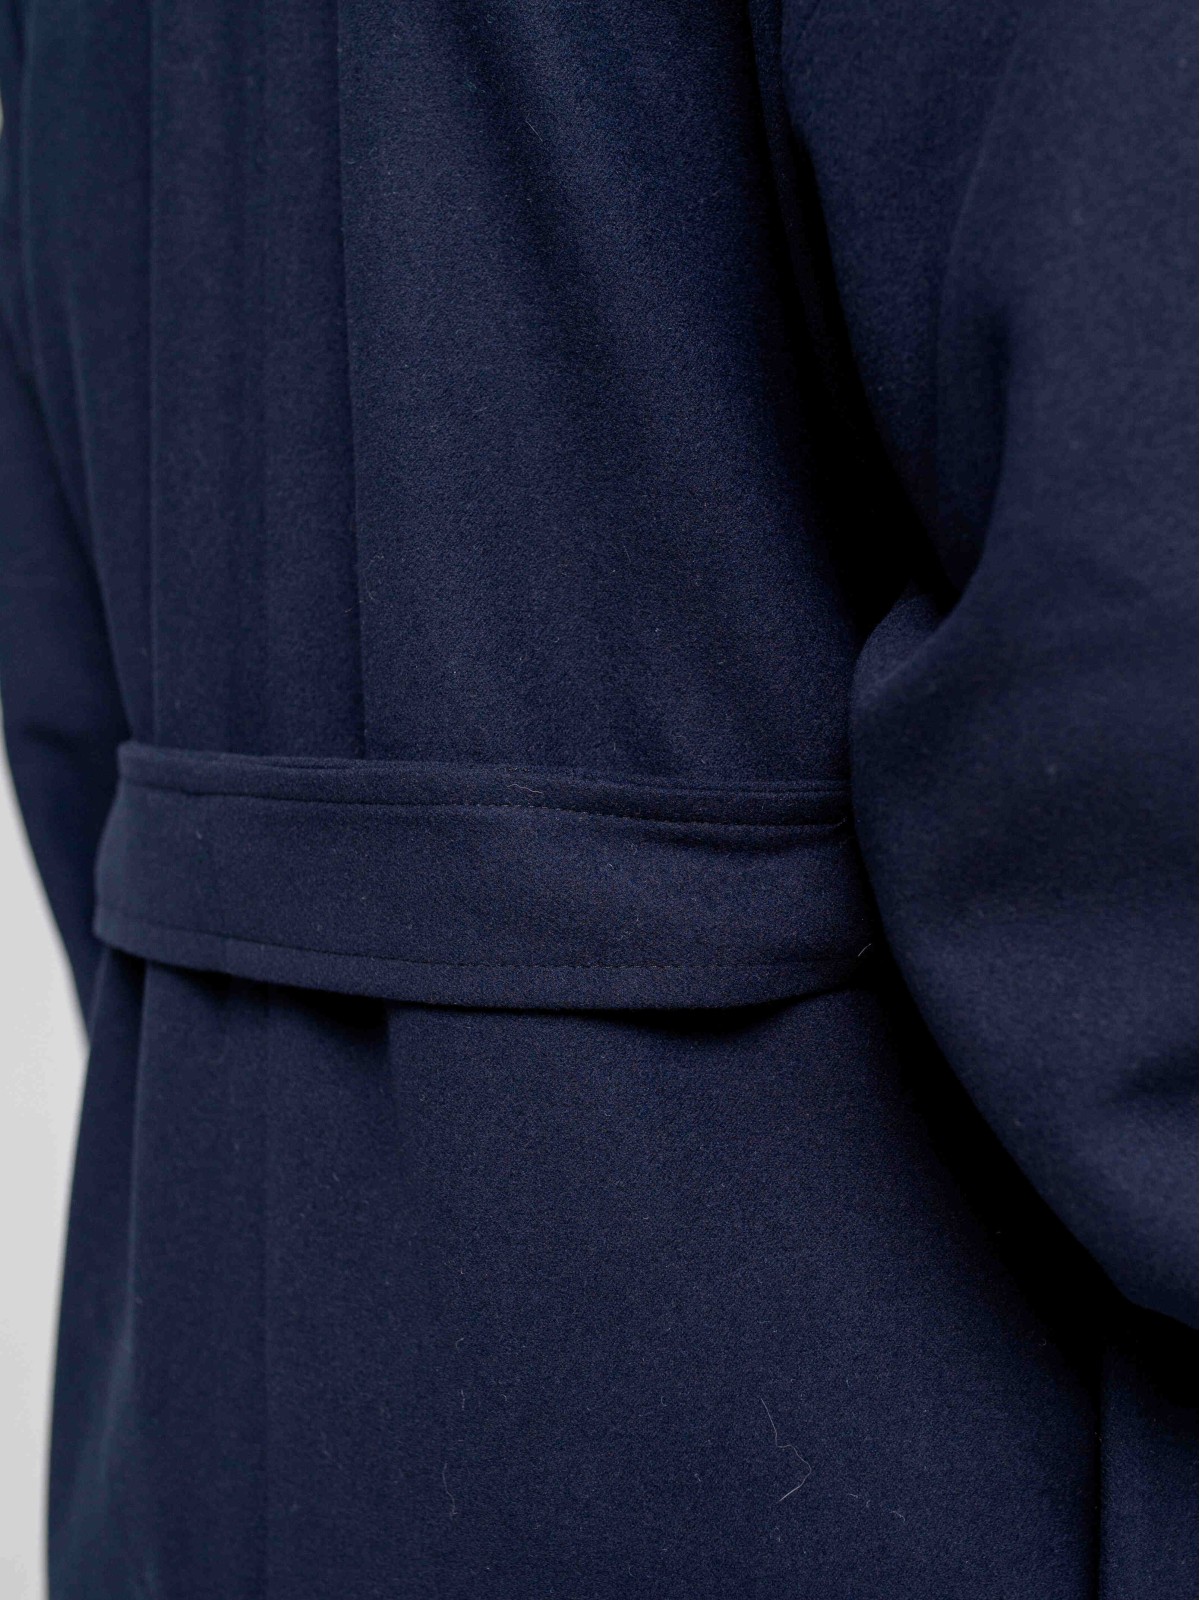 Пальто однобортное Dark Blue (Темно-синий)